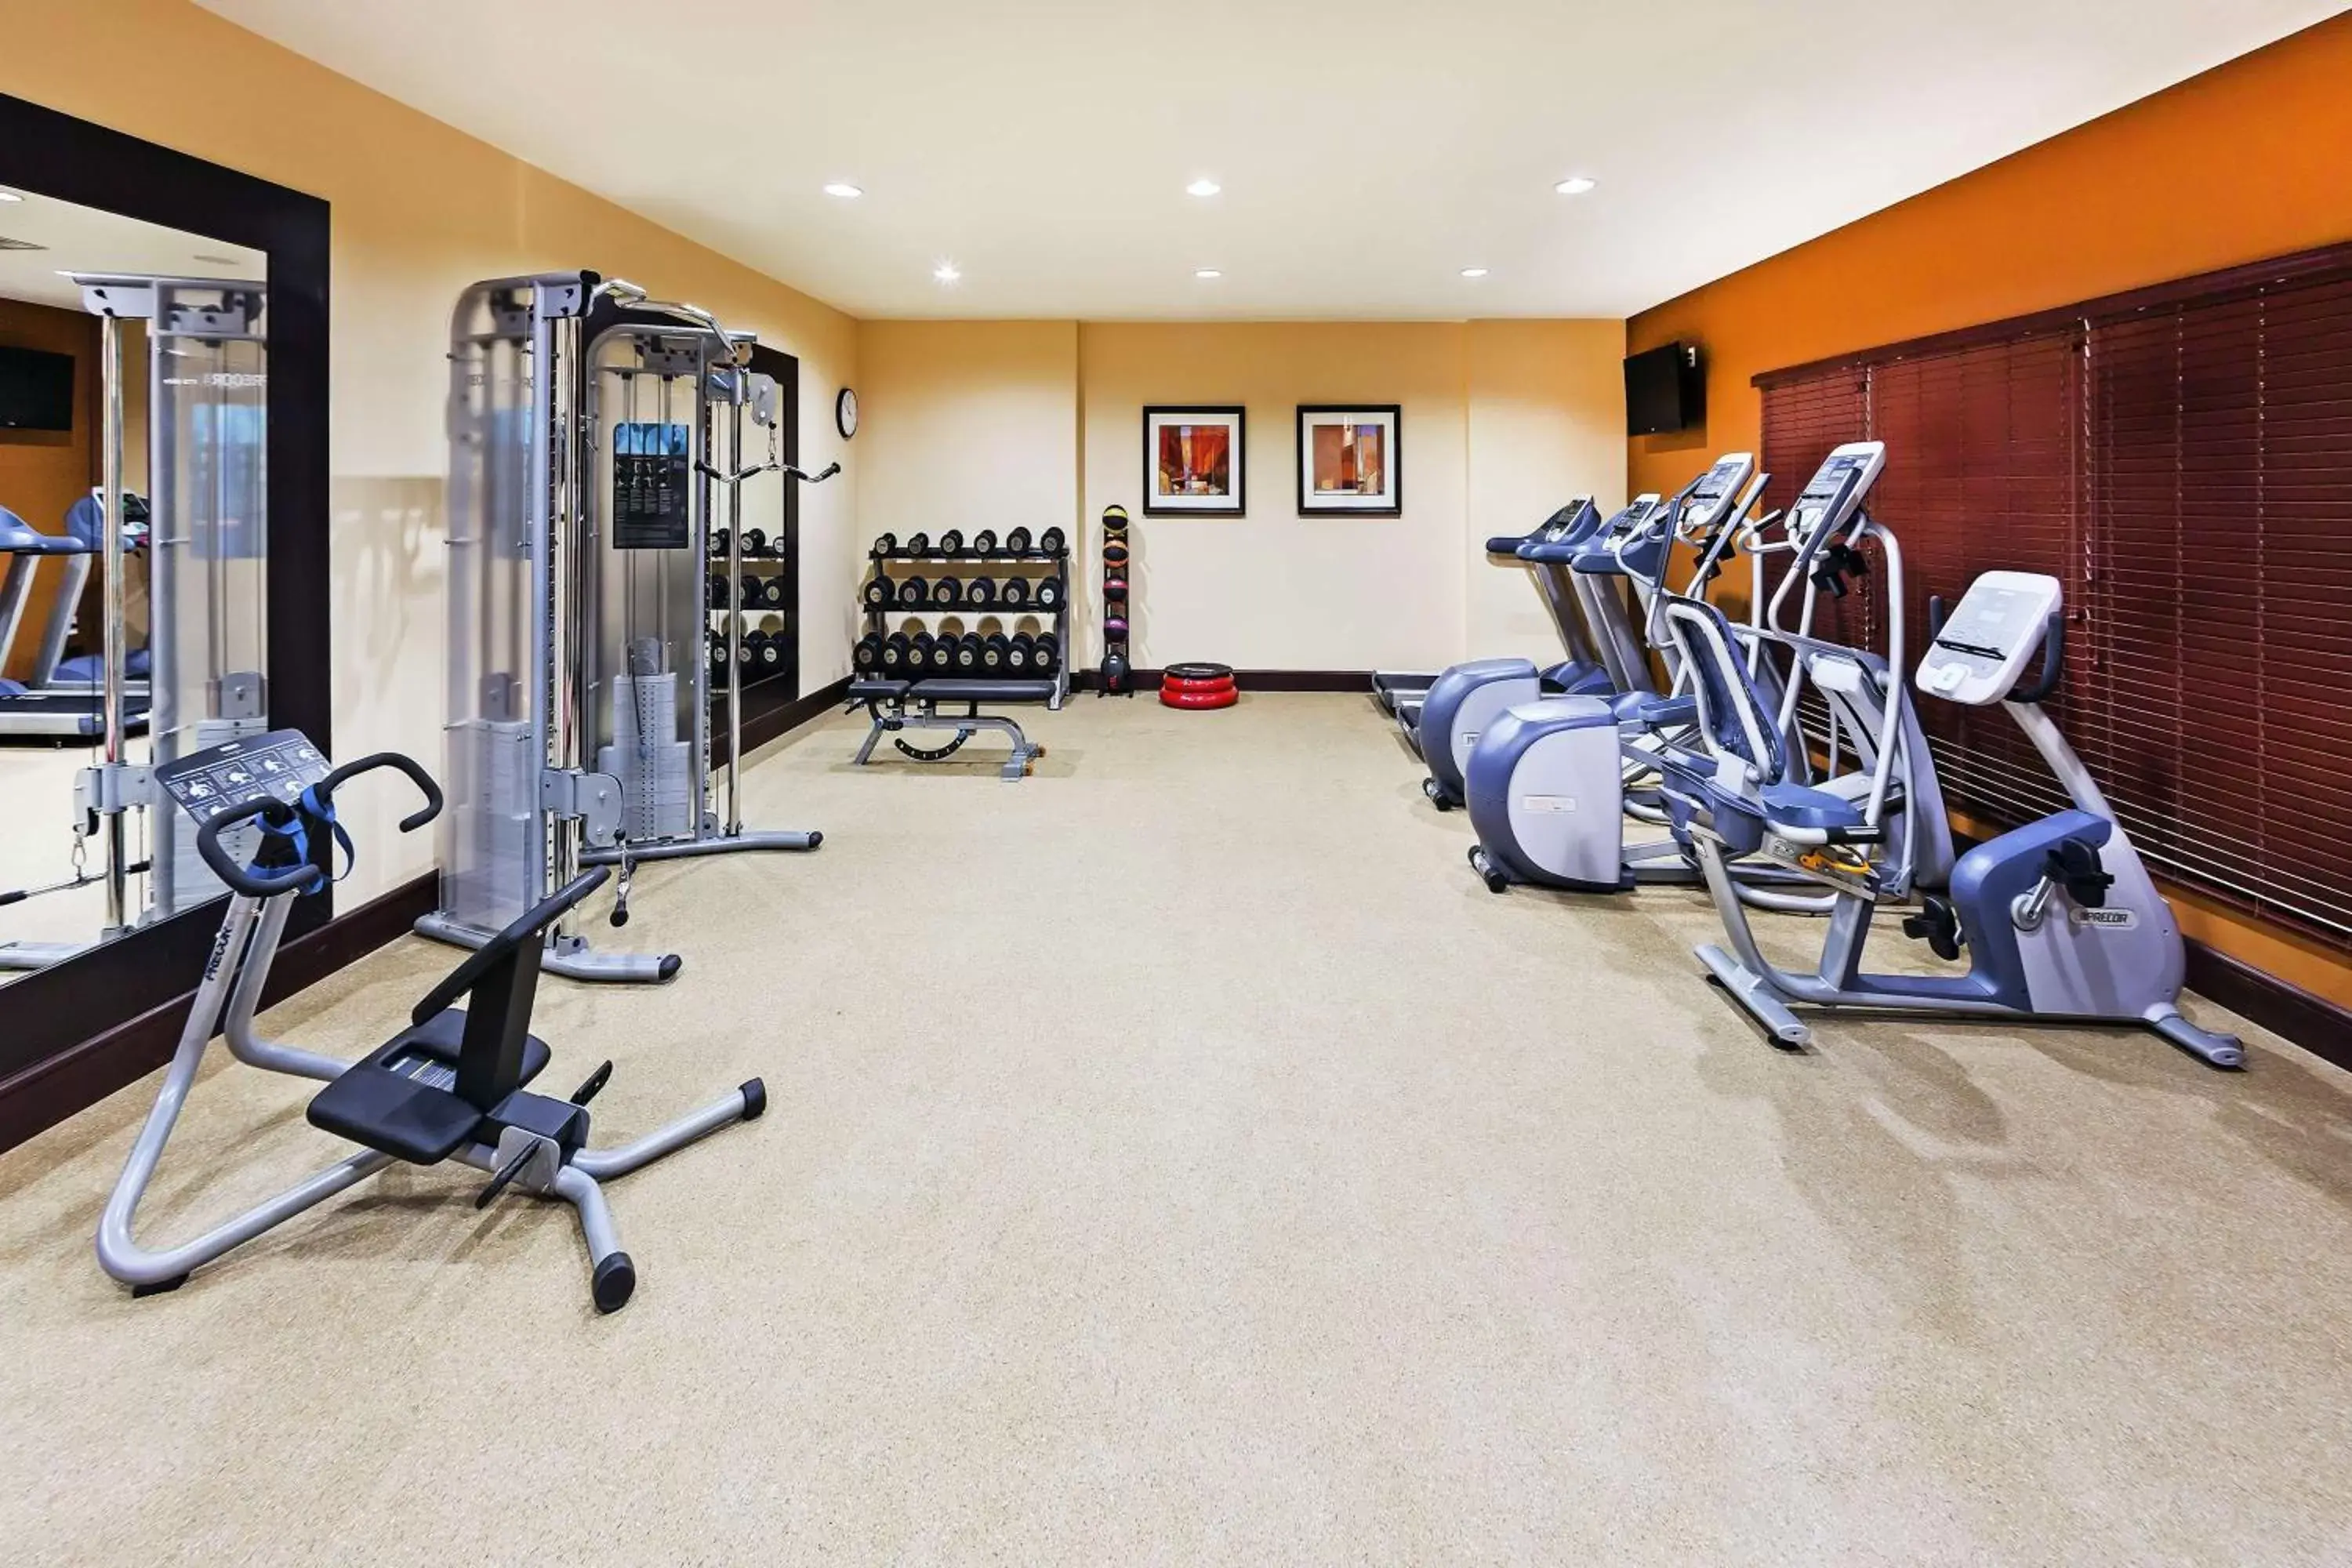 Fitness centre/facilities, Fitness Center/Facilities in Hilton Garden Inn Midland